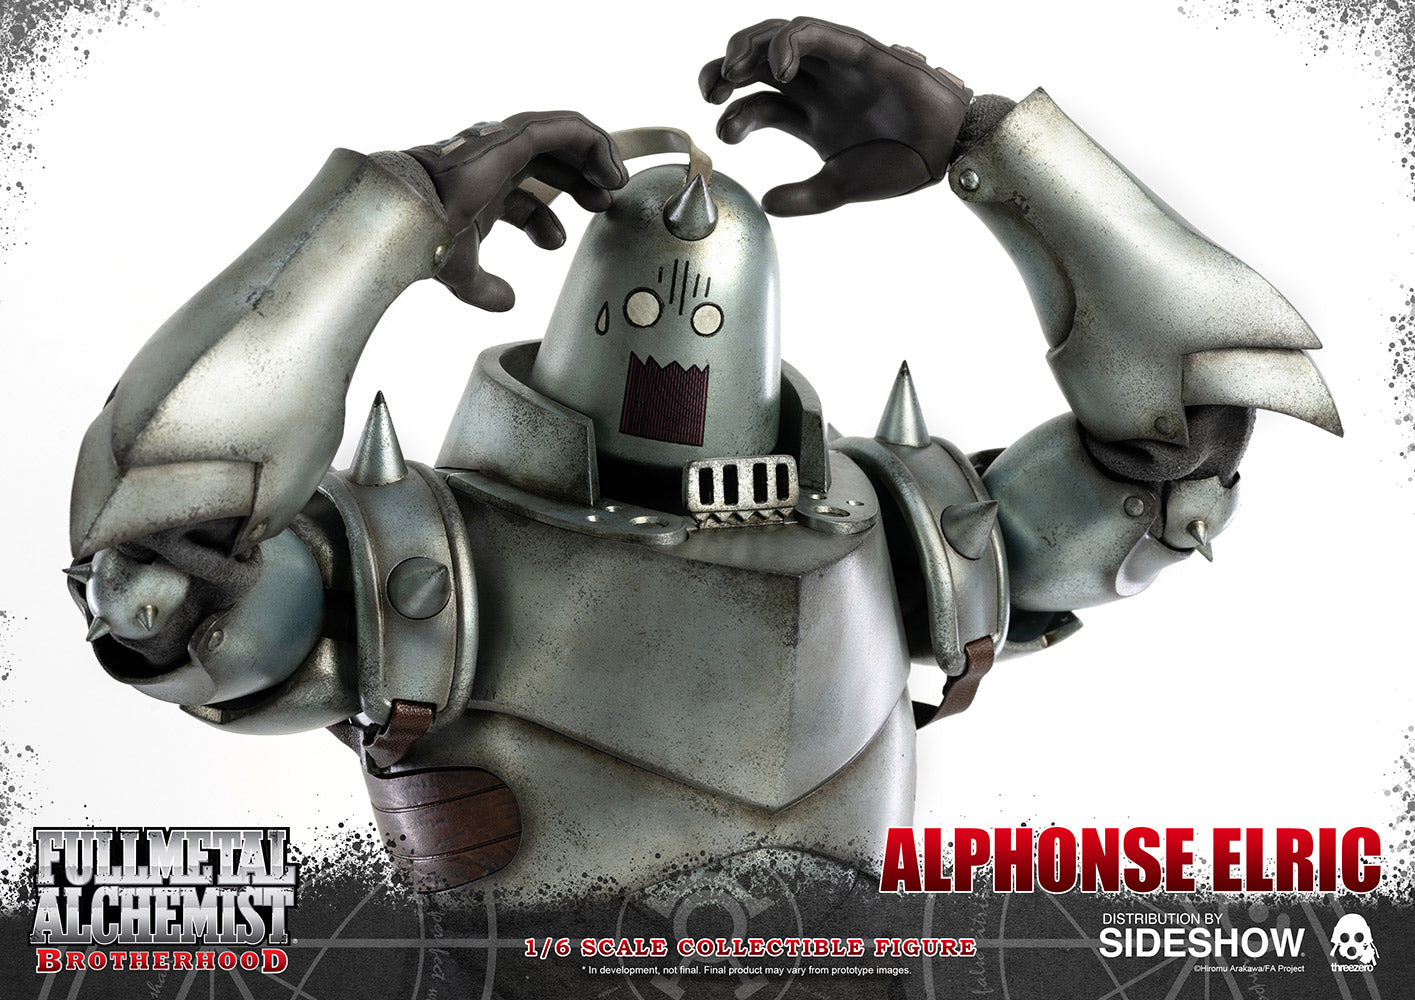 Alphonse Elric - Full Metal Alchemist - Sixth Scale Figure by ThreeZero